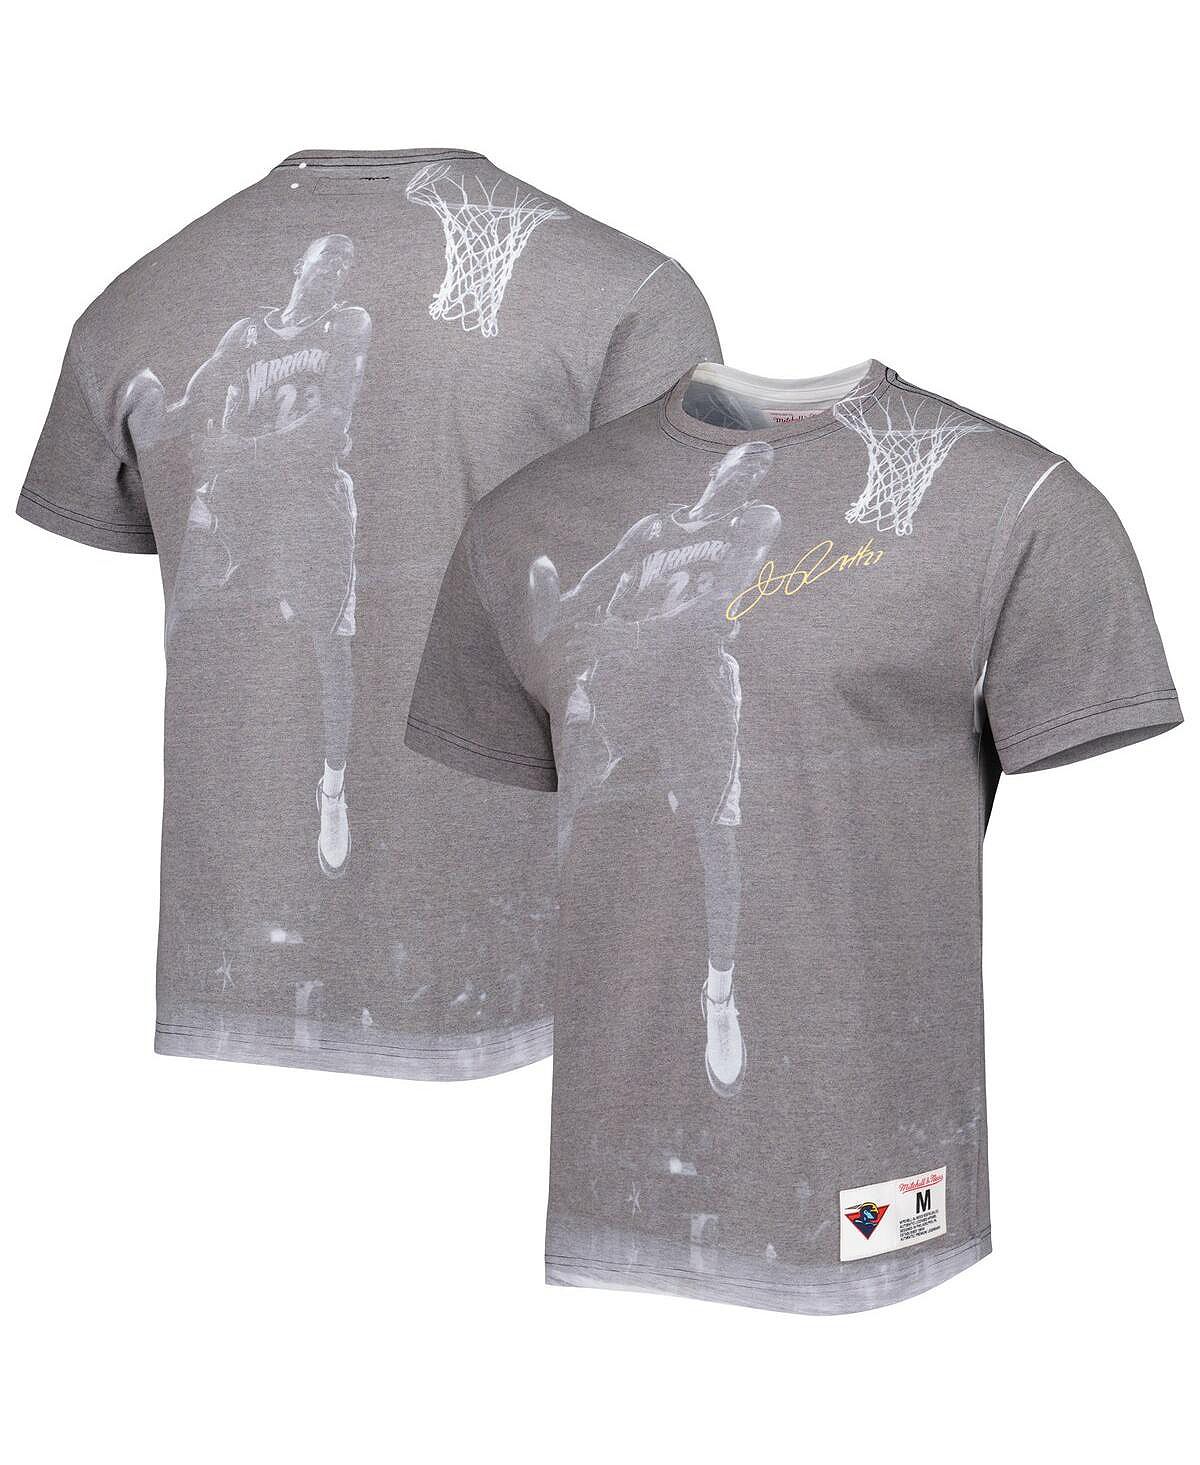 Мужская футболка jason richardson grey golden state warriors above the rim с сублимацией Mitchell & Ness, серый георгина голден тач